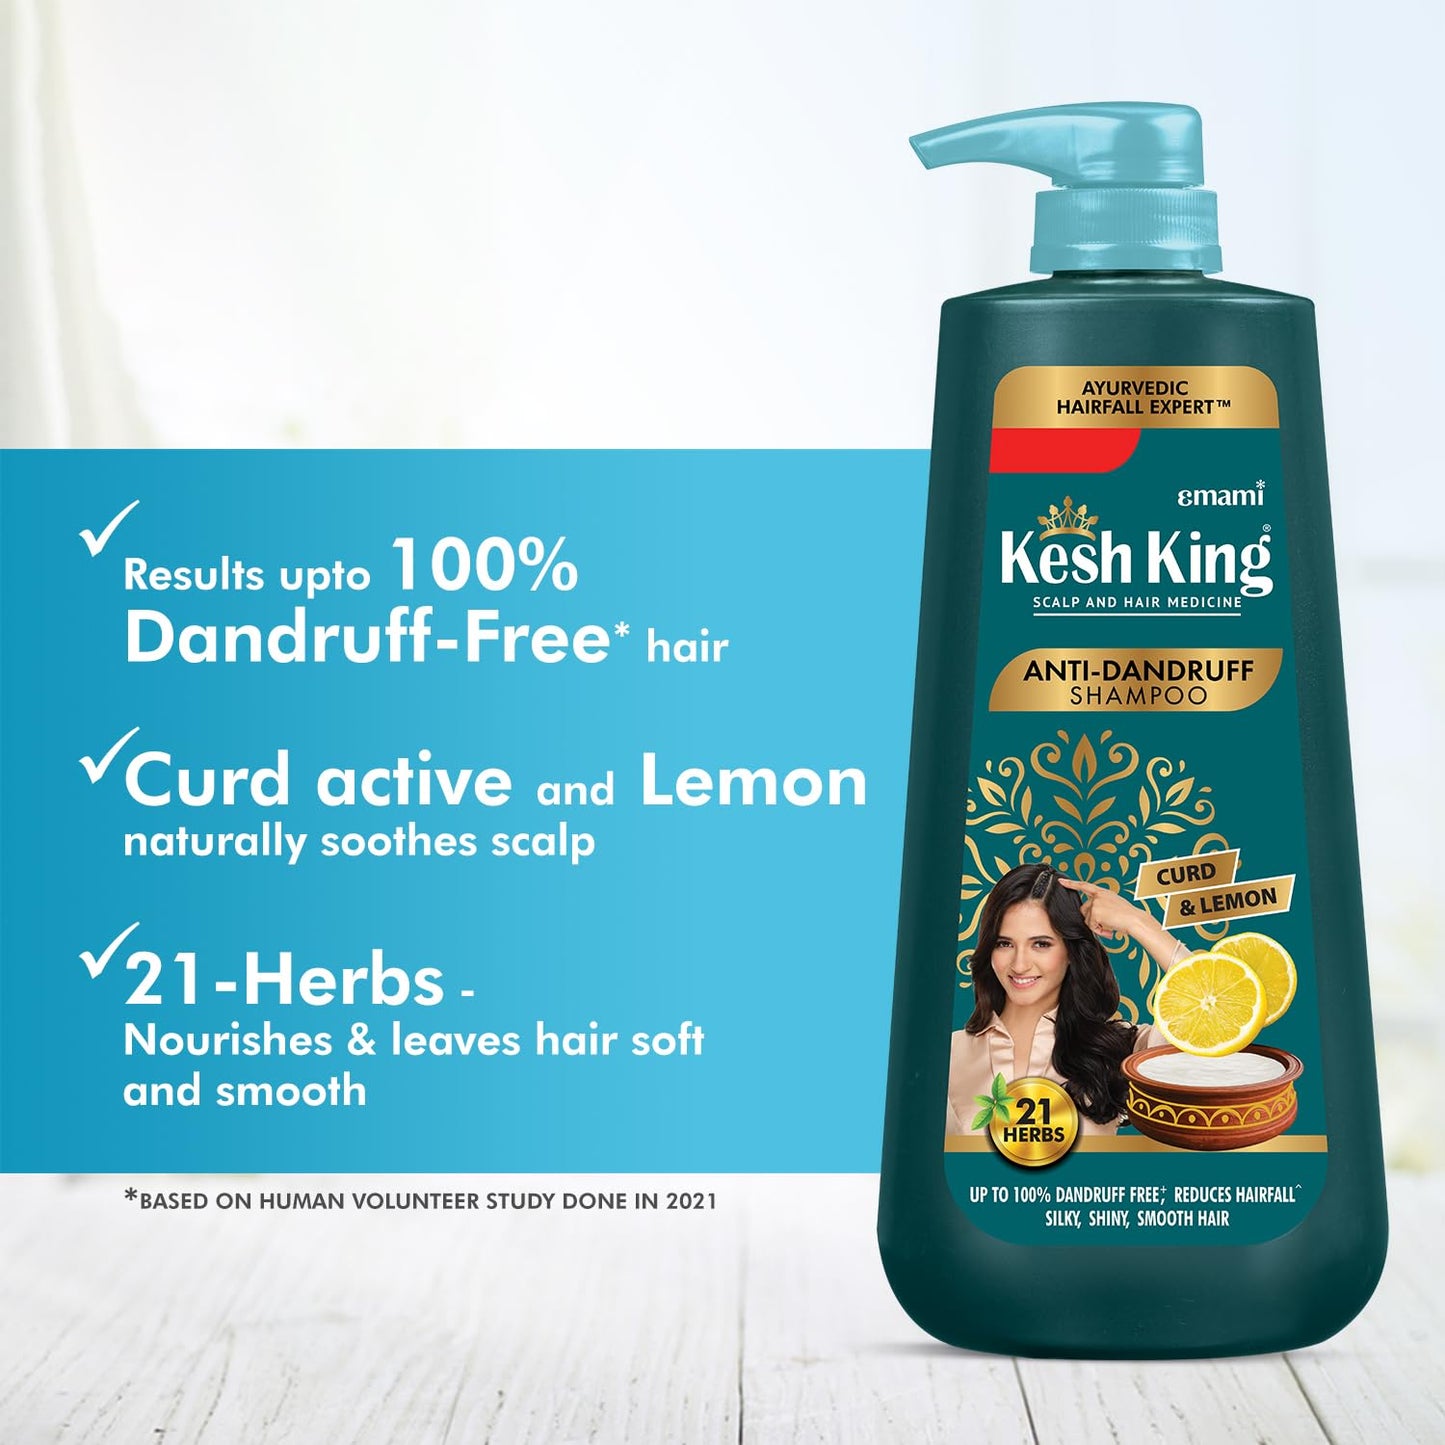 Emami Kesh King Anti-Dandruff Shampoo